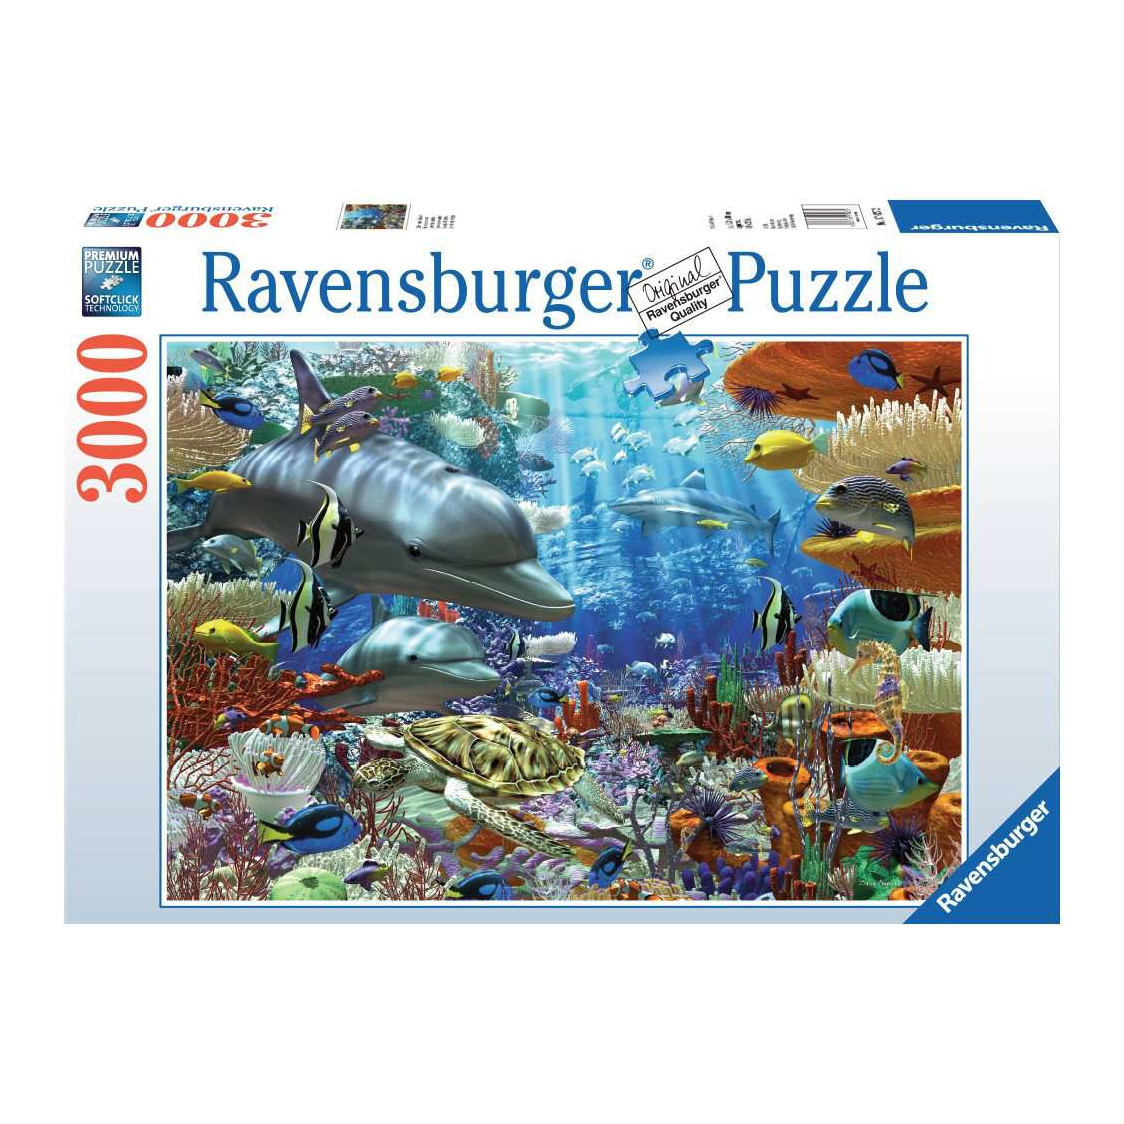 Ravensburger - Underwater Paradise - 9000 Piece Jigsaw Puzzle 